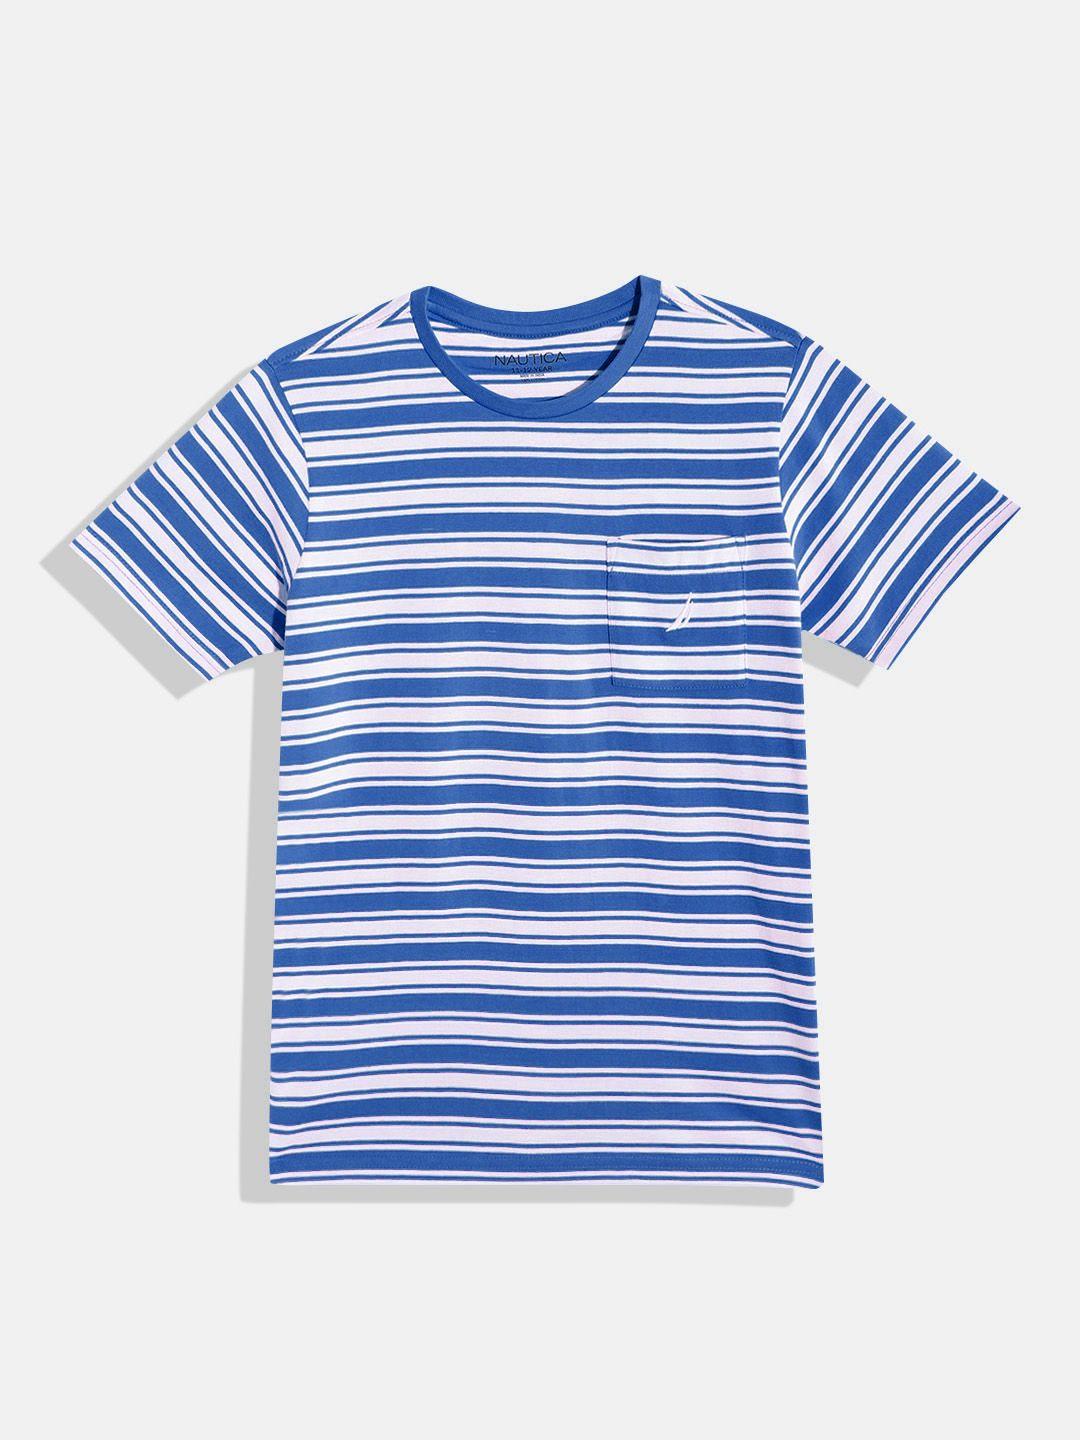 Nautica Boys Striped Pure Cotton T-shirt